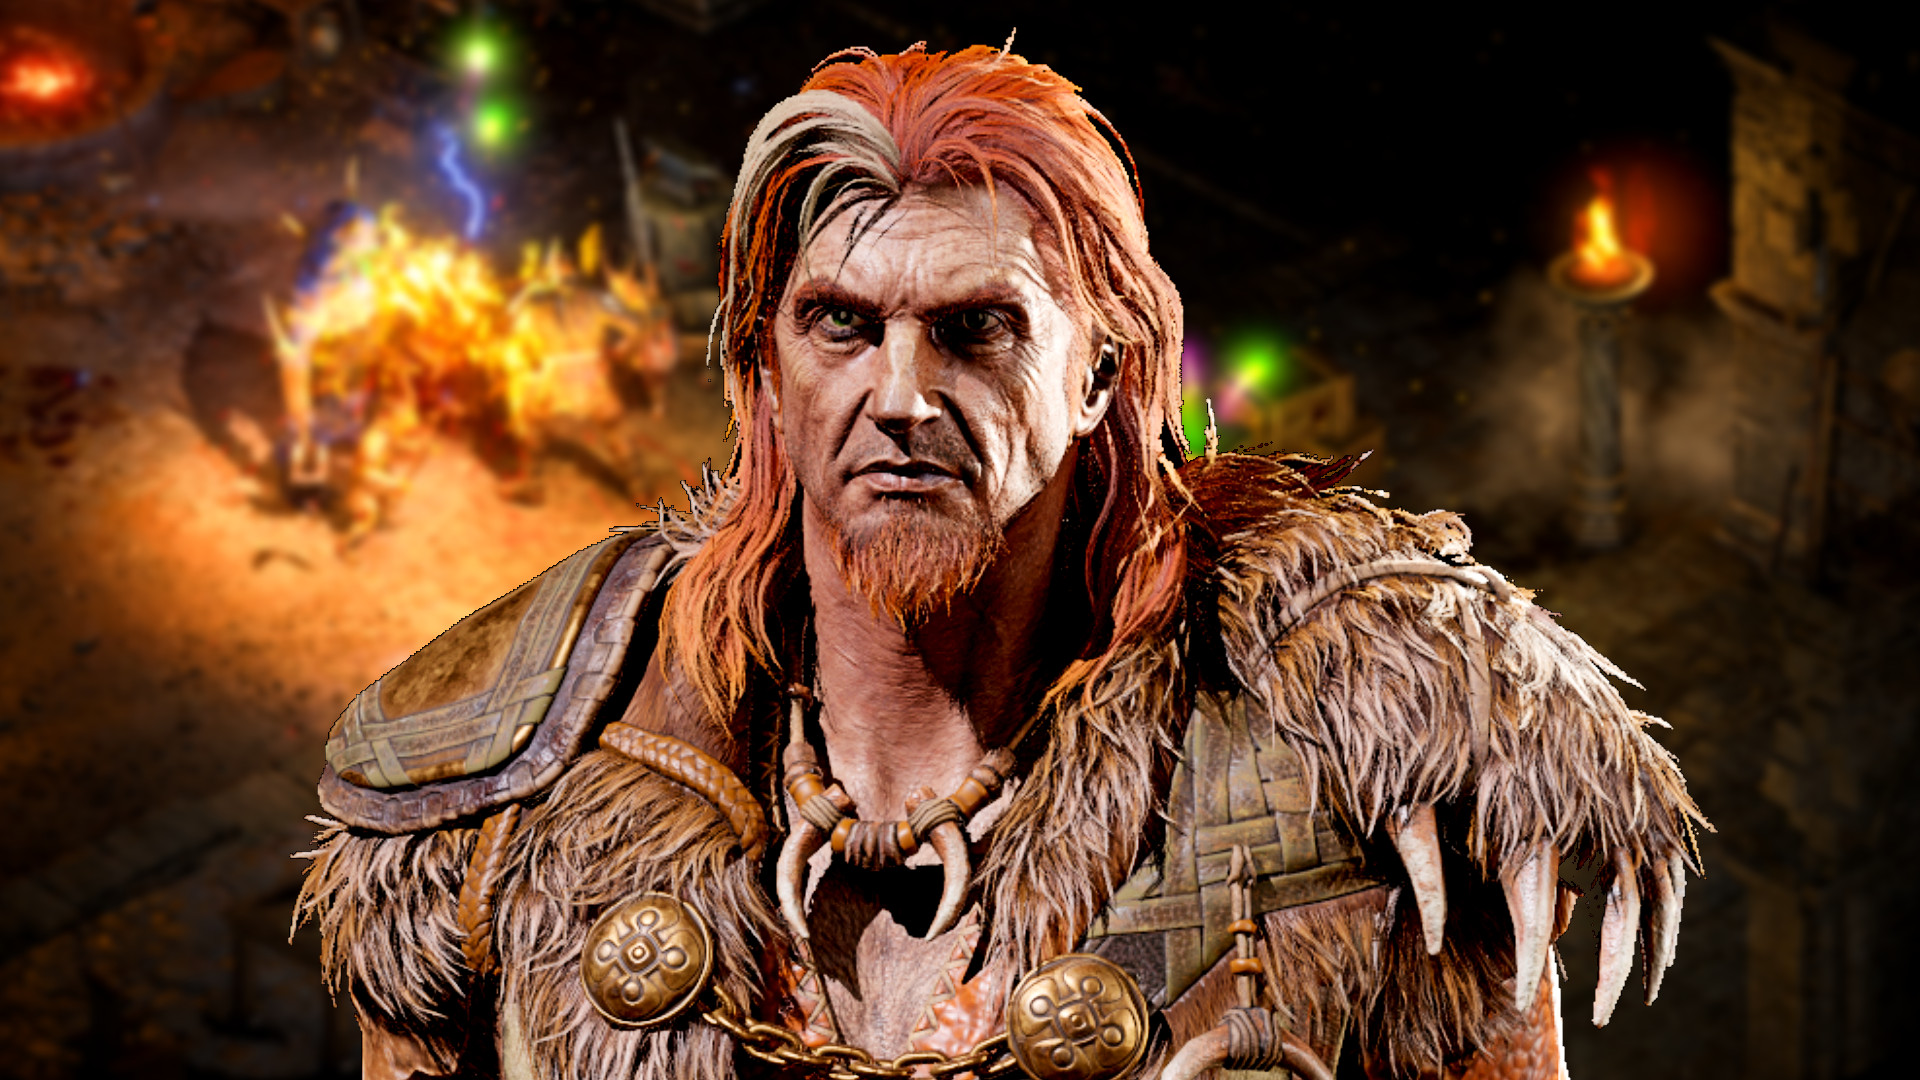 GTA 5 Mods Druid in Diablo 2 Resurrected - GTA 5 Mods Website